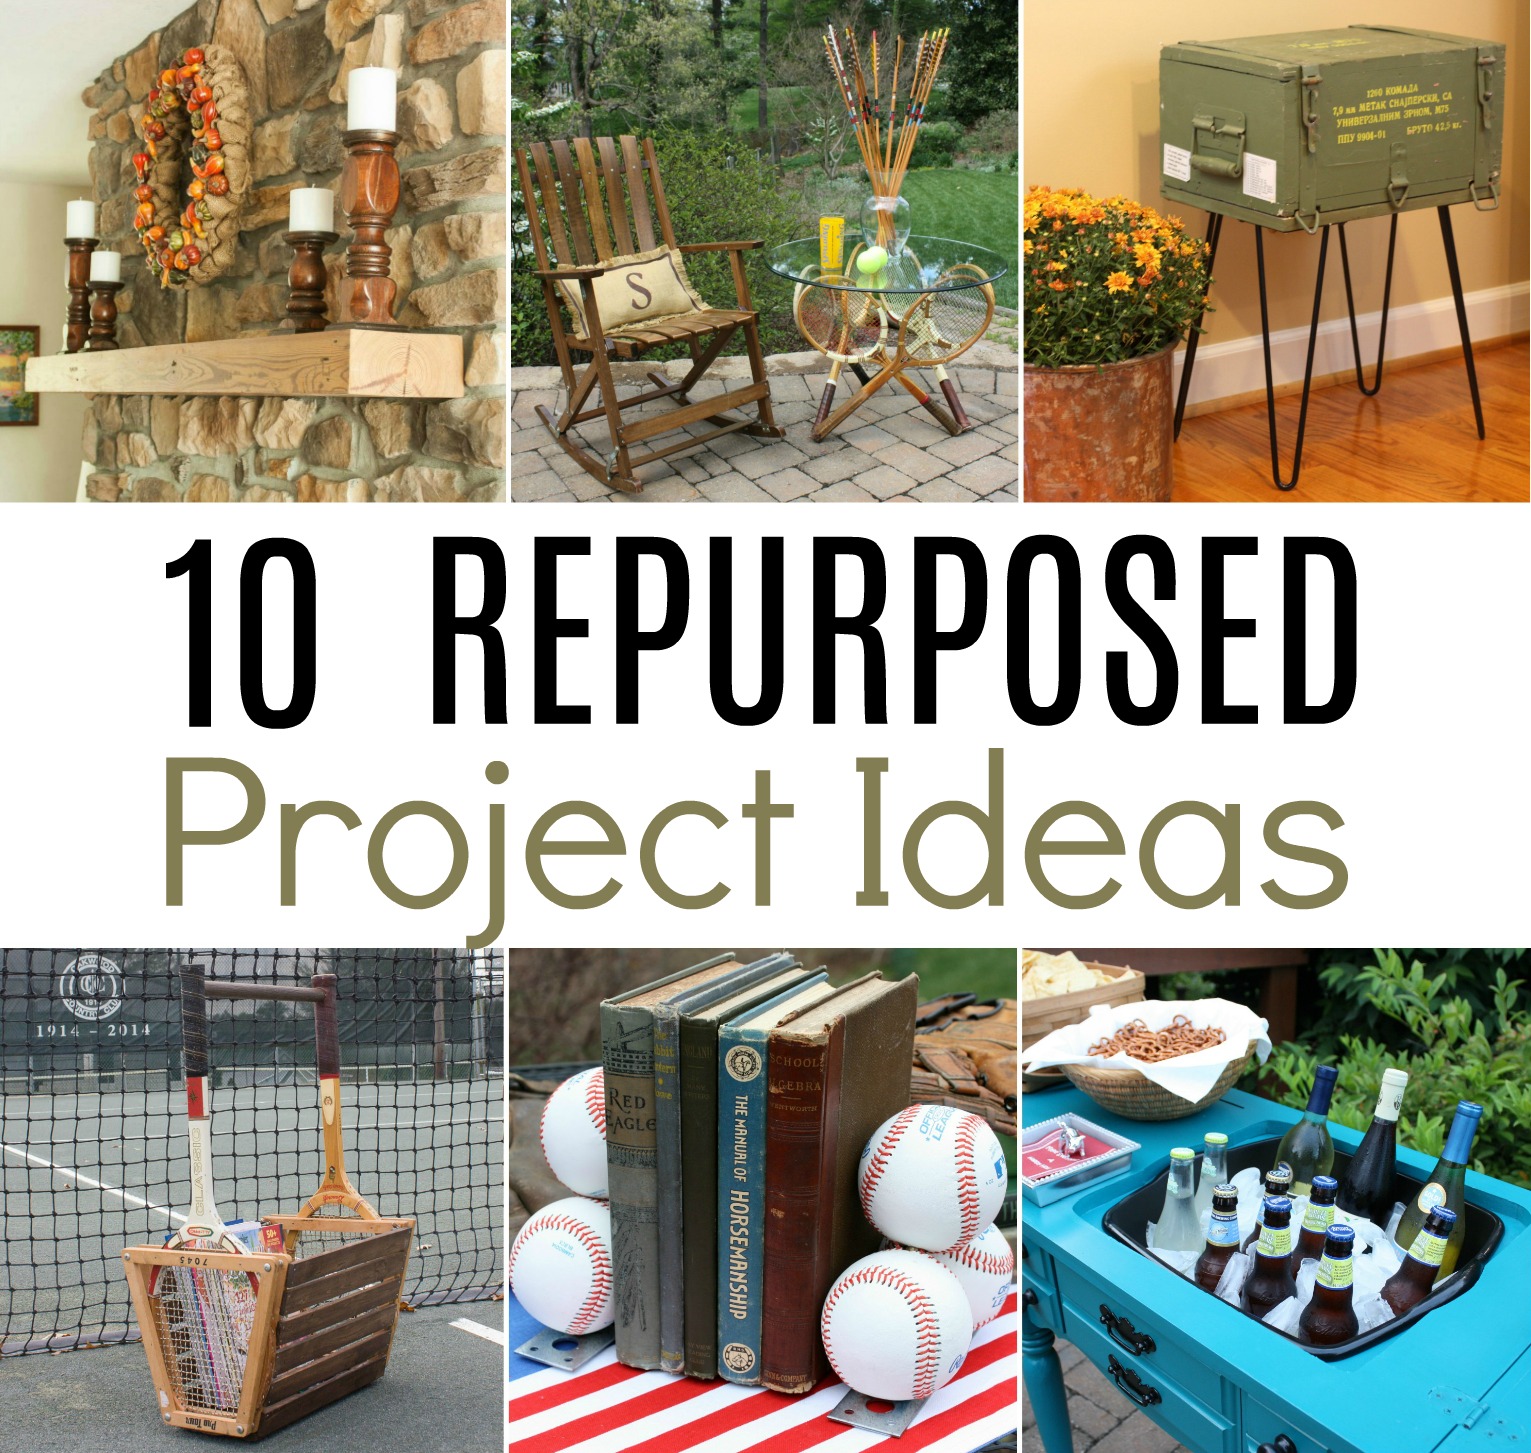 Get 10 repurposed project ideas.